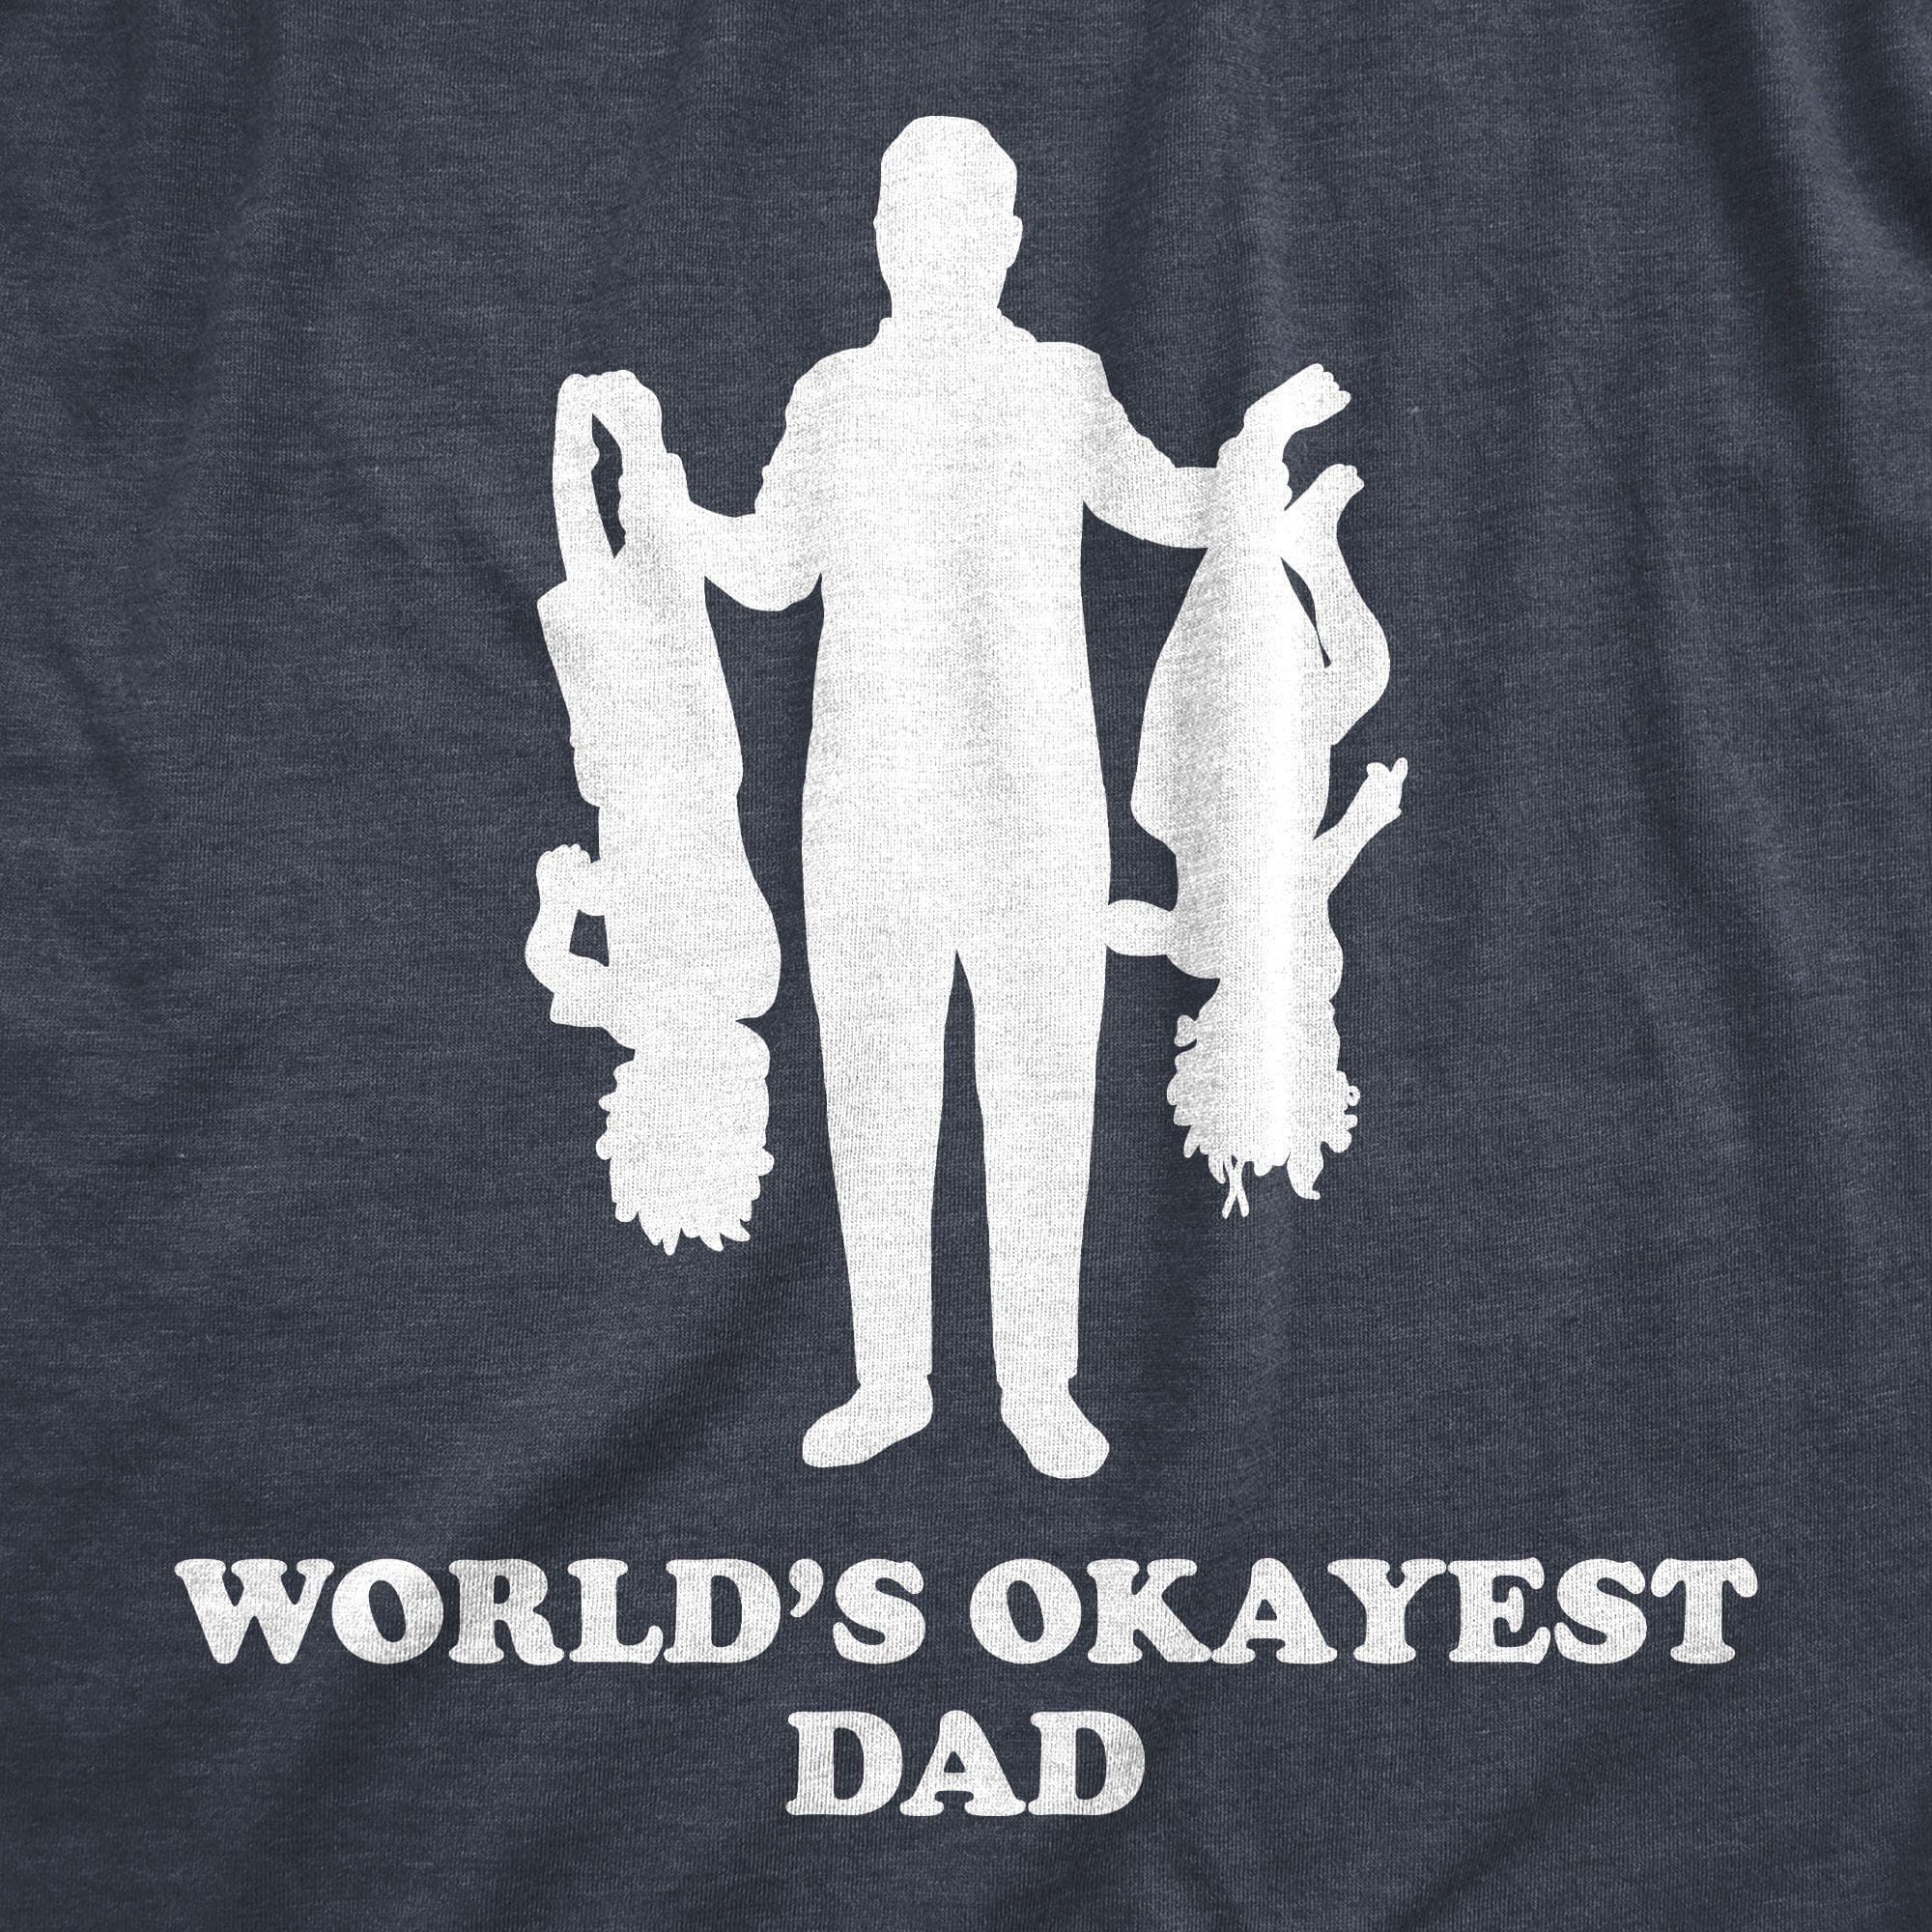 Upside Down Kids World's Okayest Dad Men's Tshirt  -  Crazy Dog T-Shirts